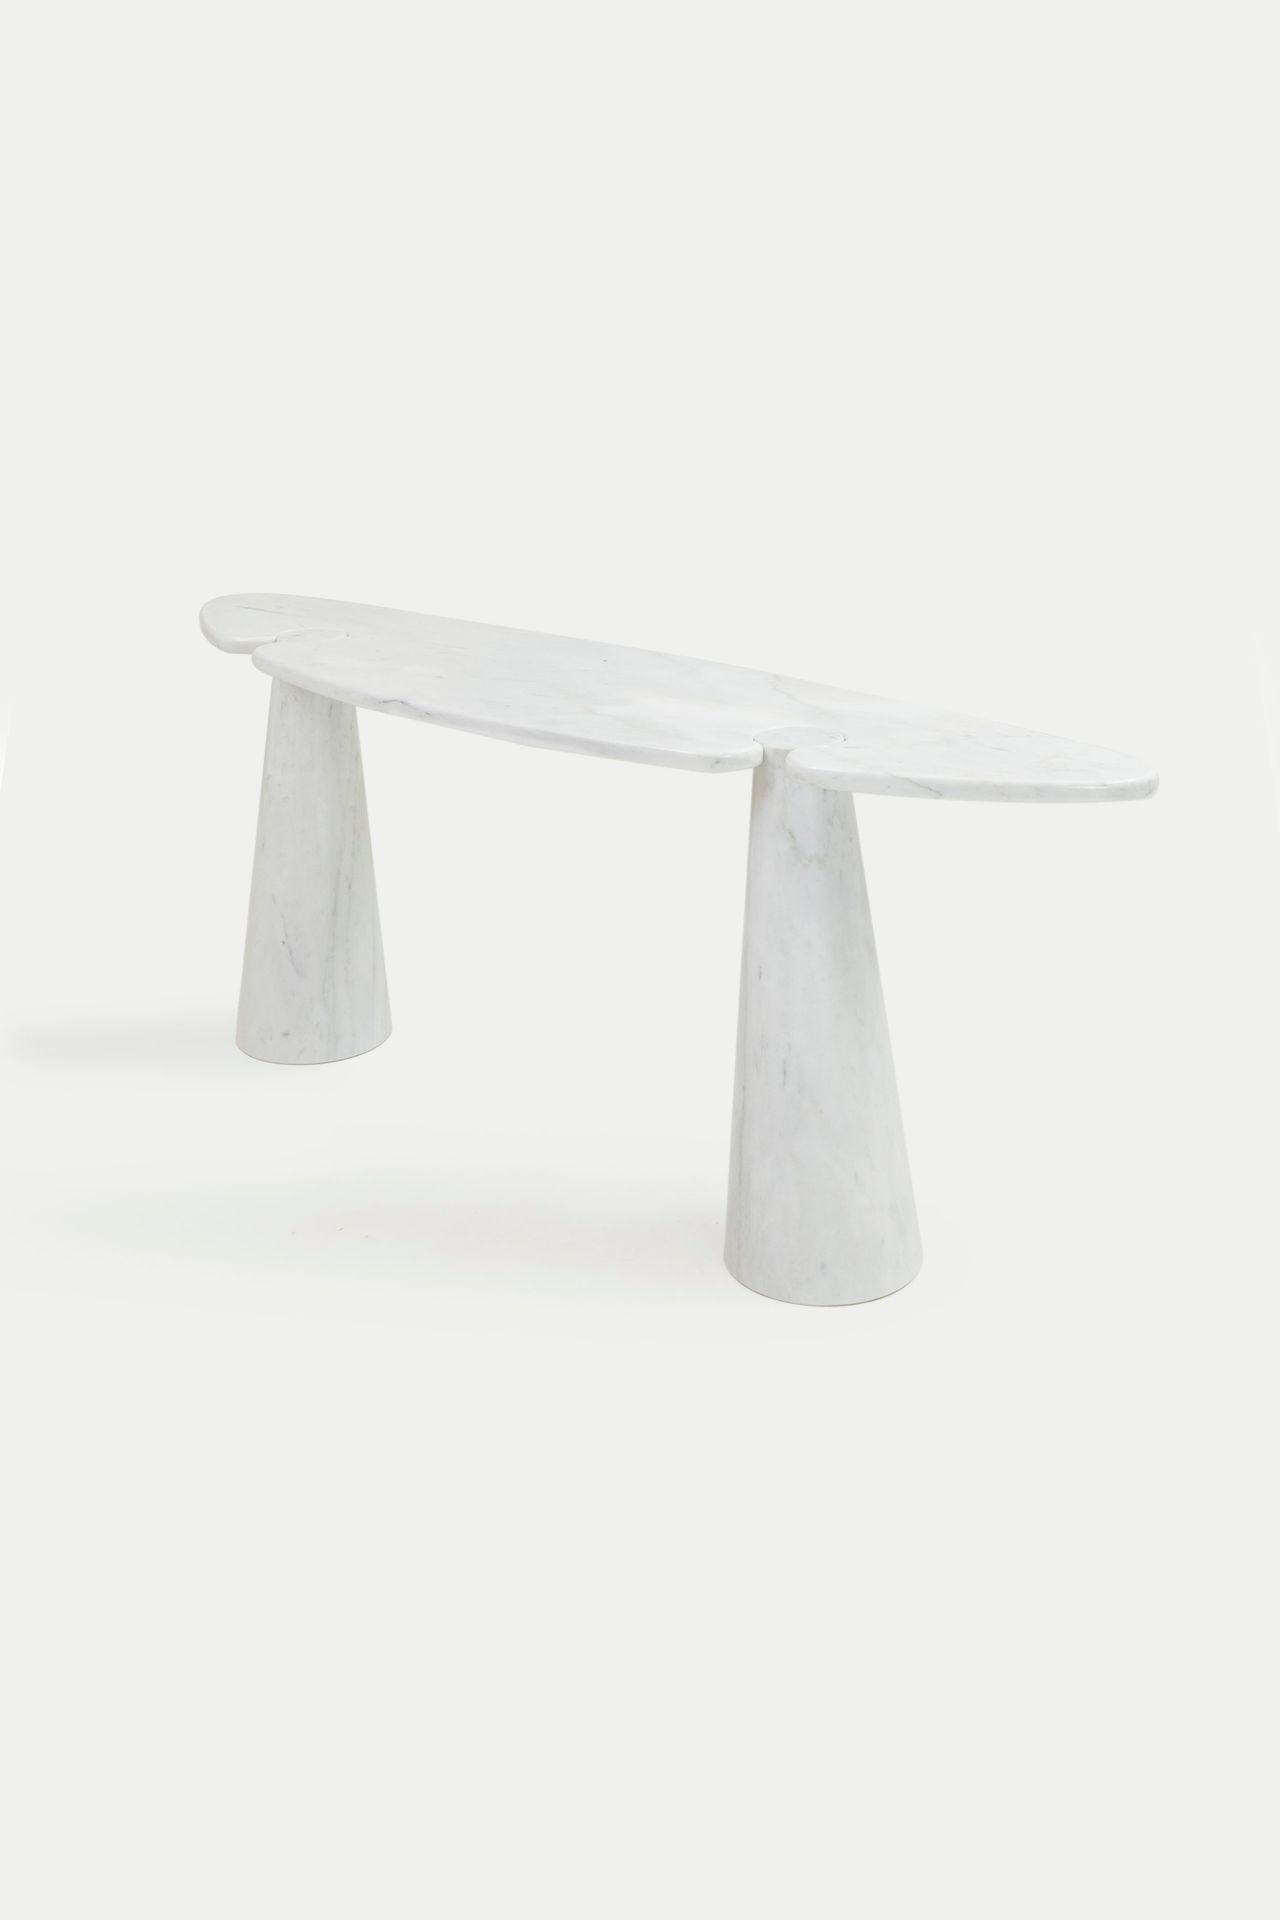 ANGELO MANGIAROTTI Eros系列的控制台桌。车削的大理石。Skipper生产的1980年代。 
cm 73x180x45
A.MANGIARO&hellip;